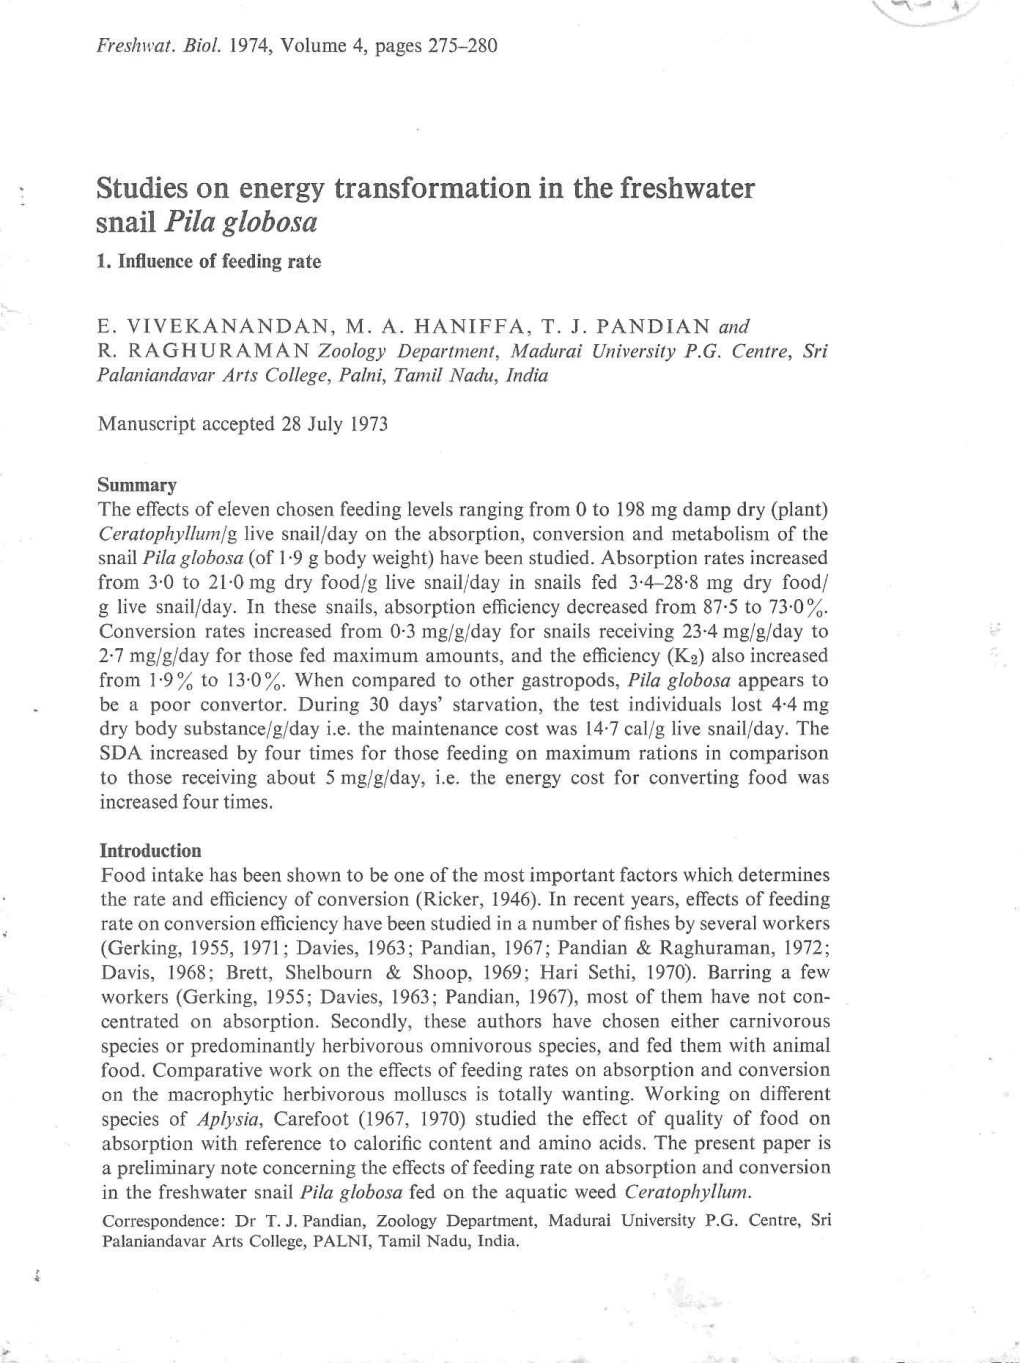 Studies on Energy Transformation in the Freshwater Snail Pila Globosa 1